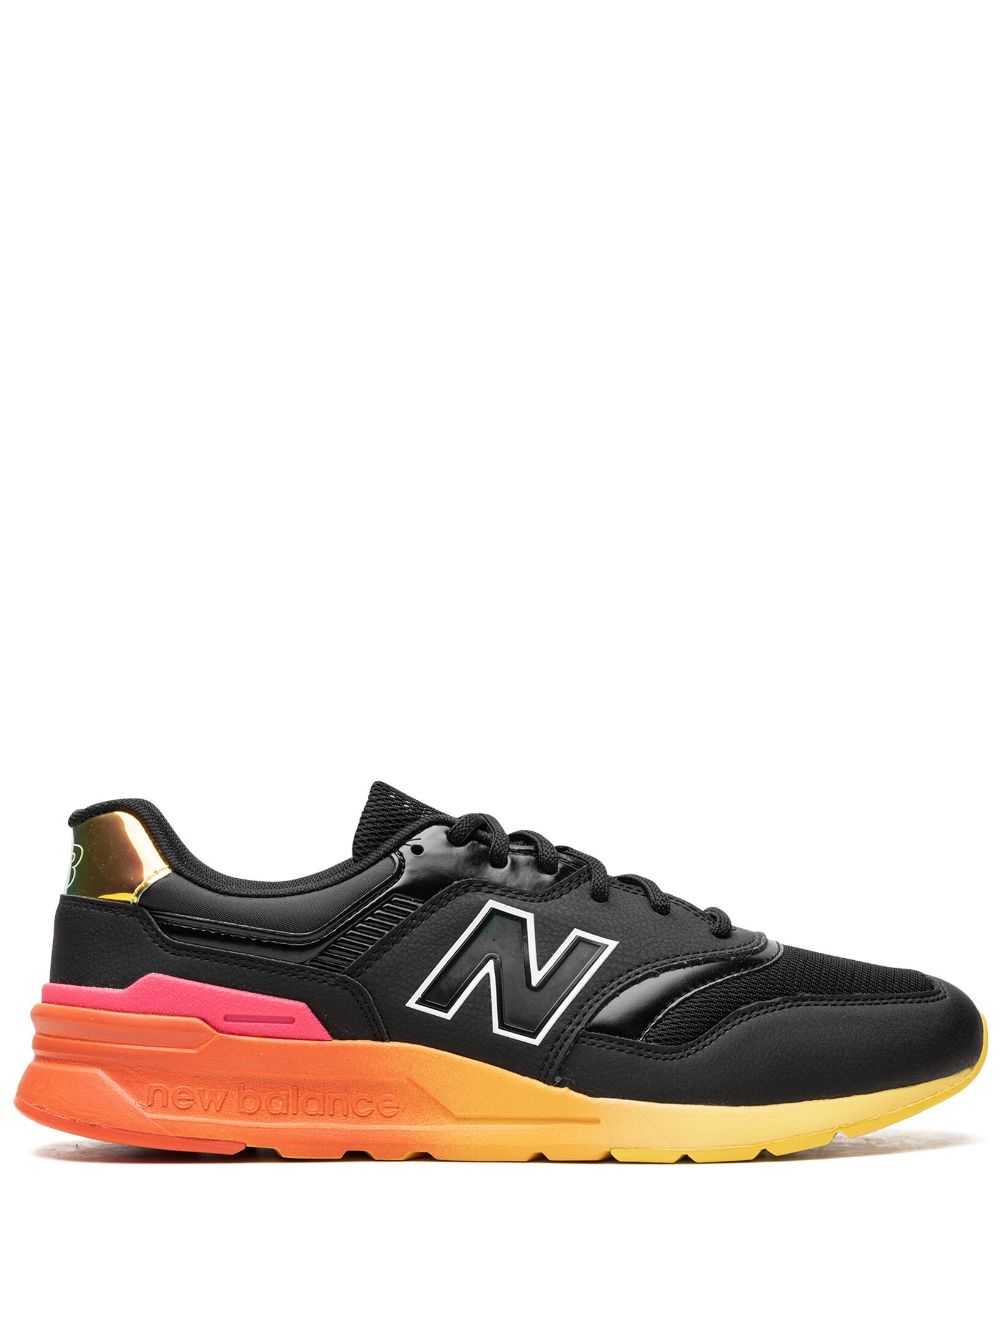 New Balance 997 "Neon Lights" sneakers - Black